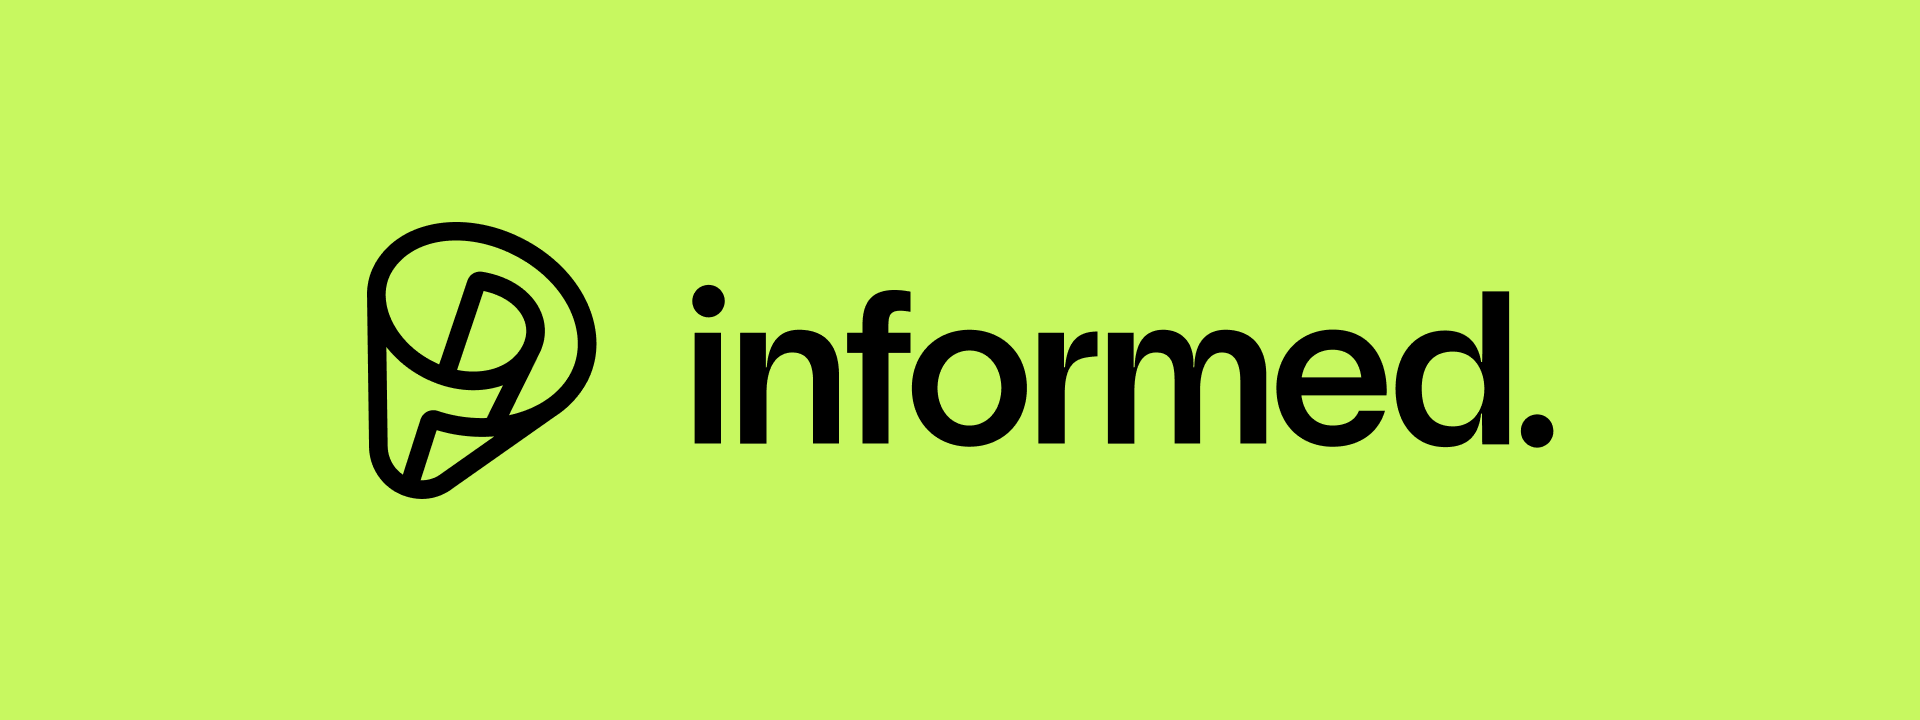 informed_logo1